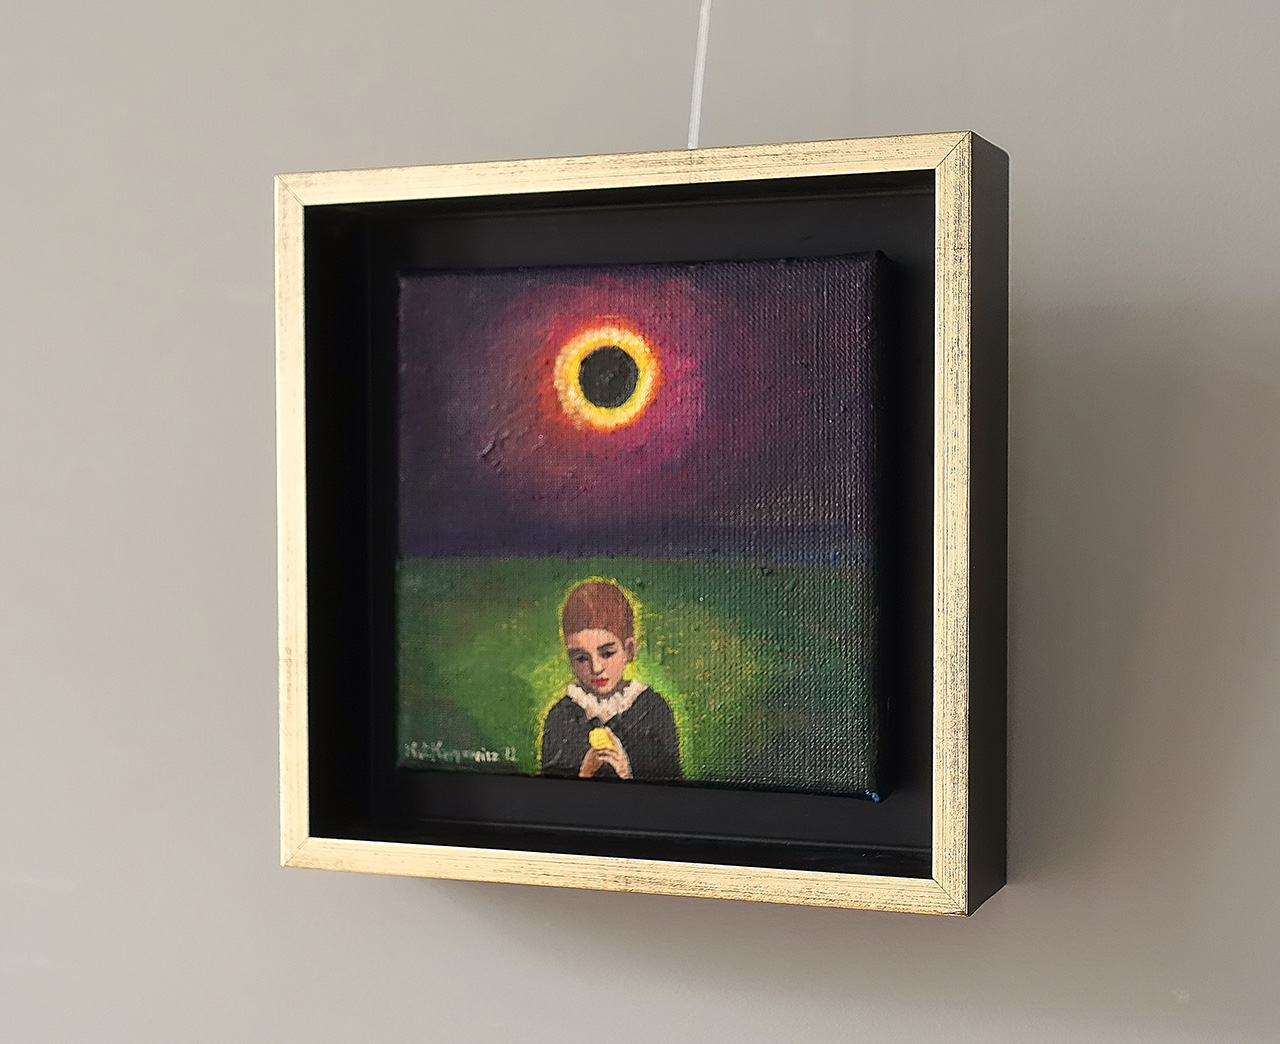 Katarzyna Karpowicz - Little gift (Black hole sun)